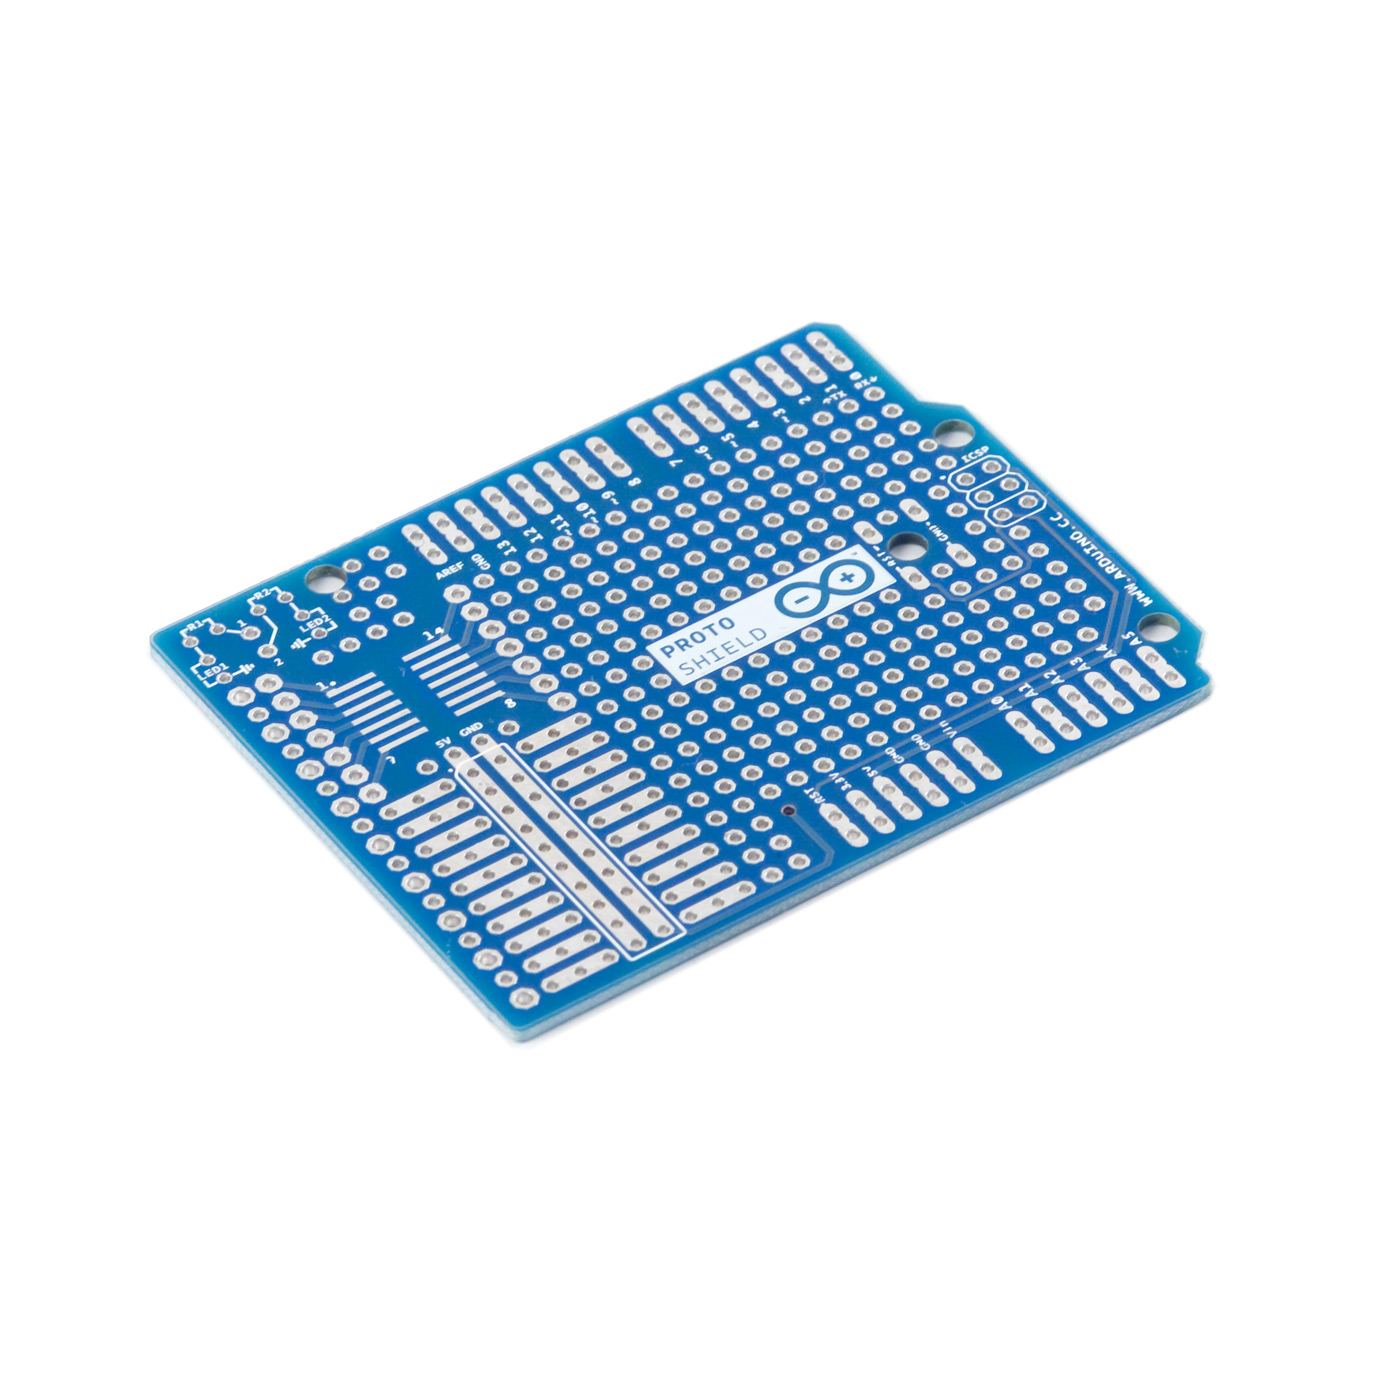 Shield - Proto PCB R3